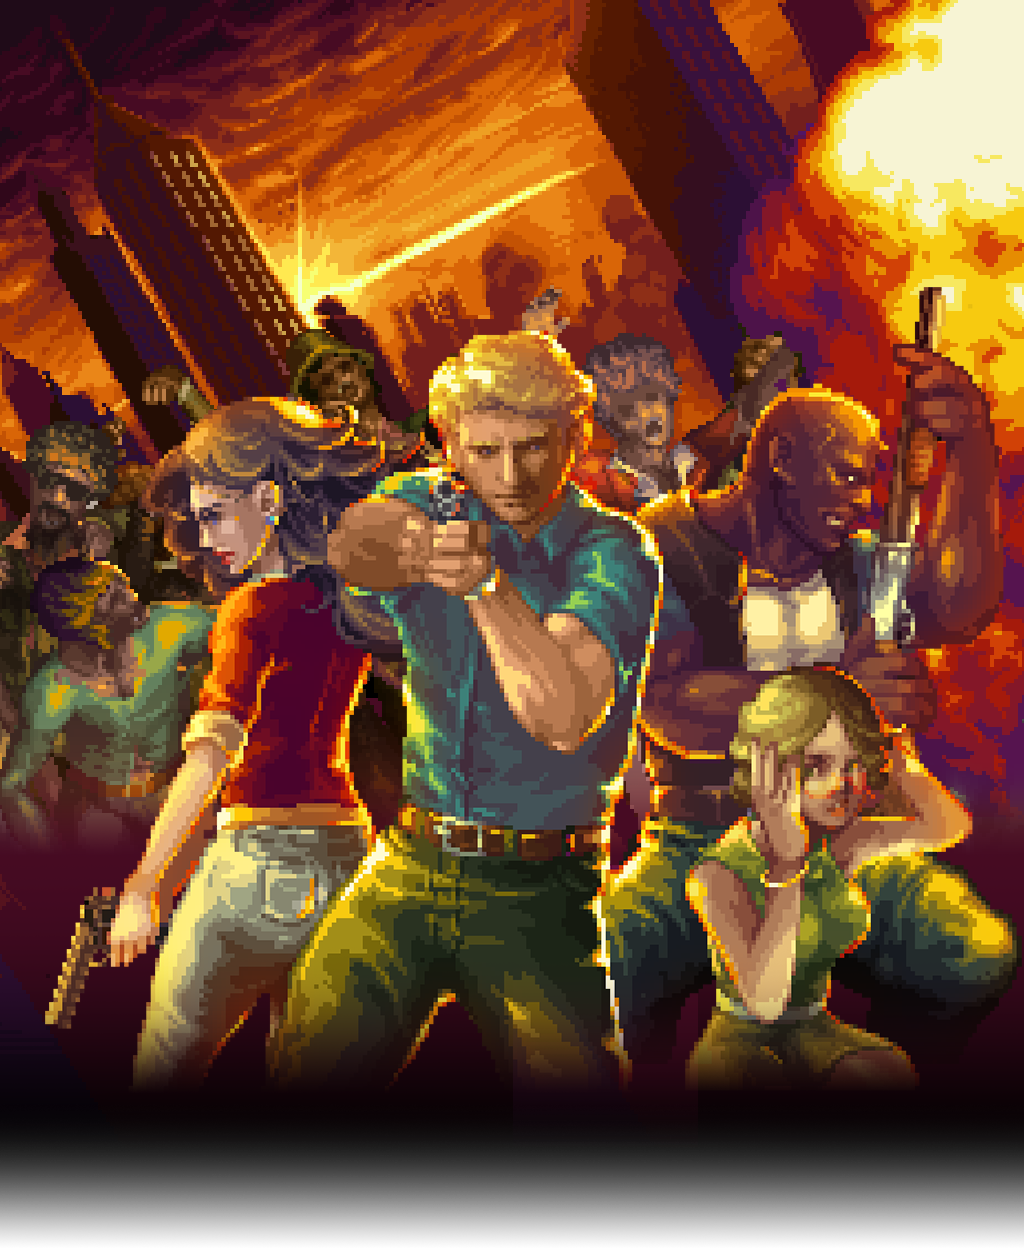 Zombie Survival RPG 'Raging Bytes' chega aos consoles Xbox e PC em